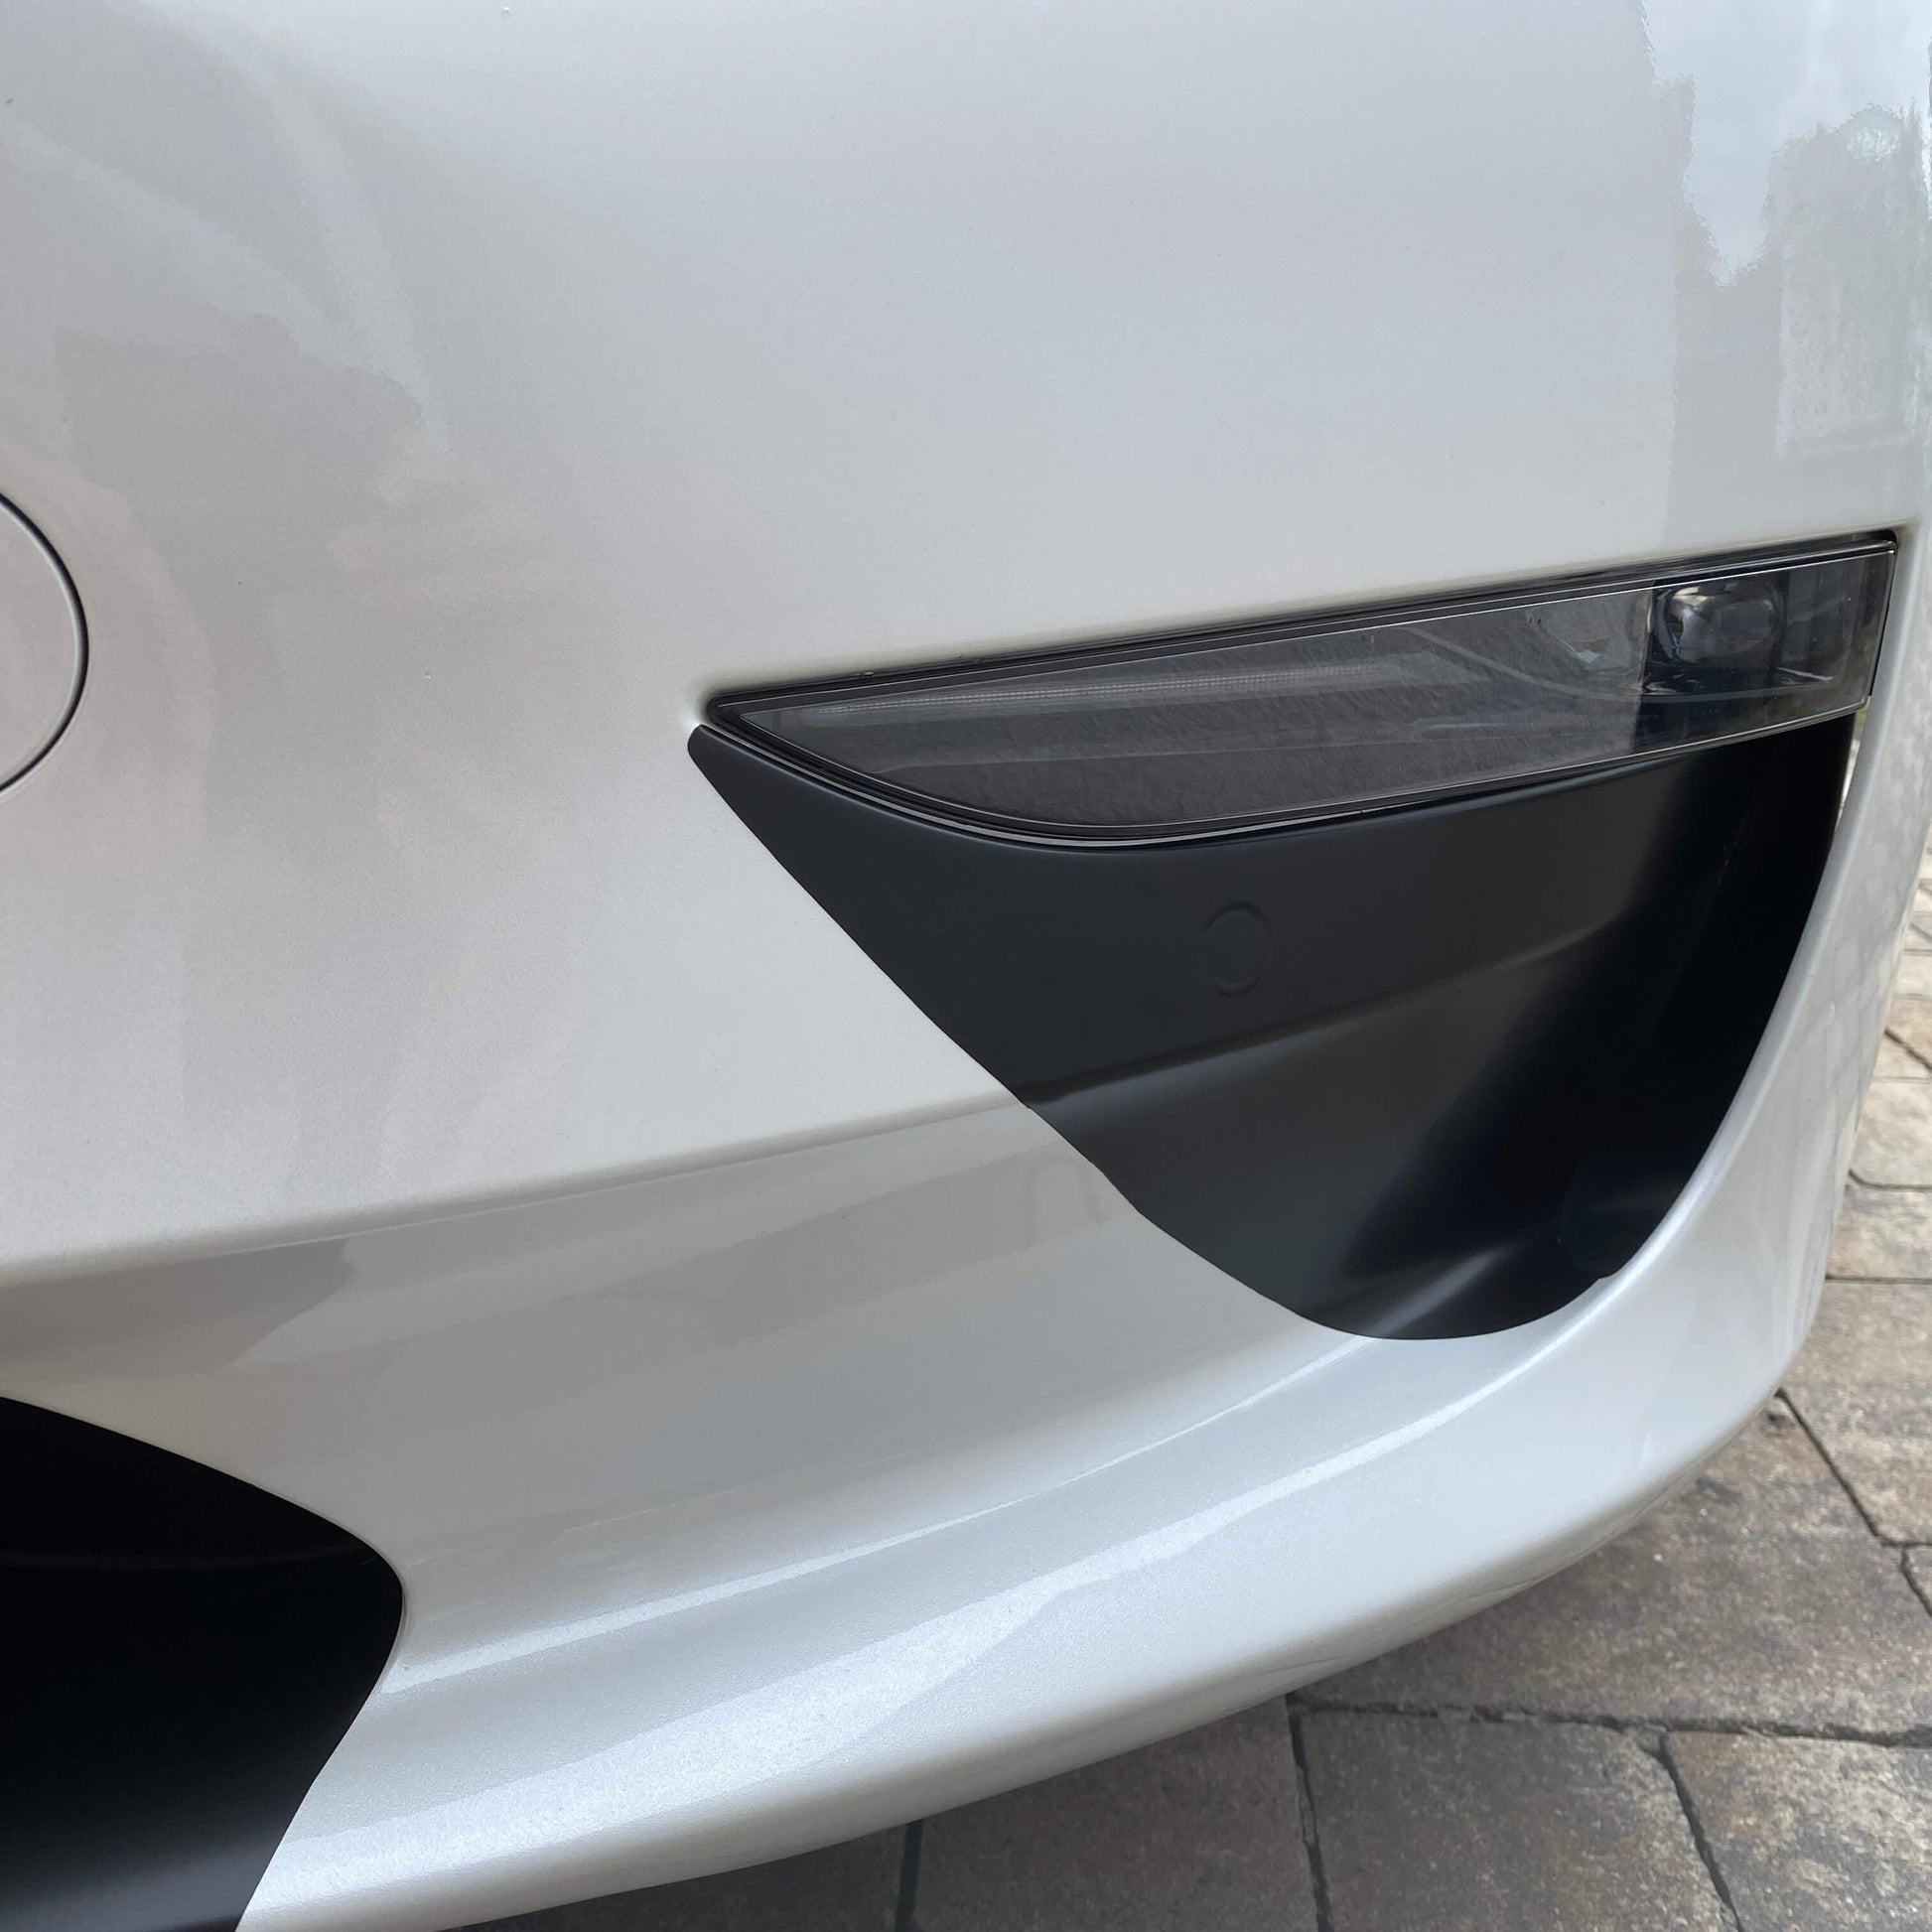 Sport mode front bumper - Tesla Model 3